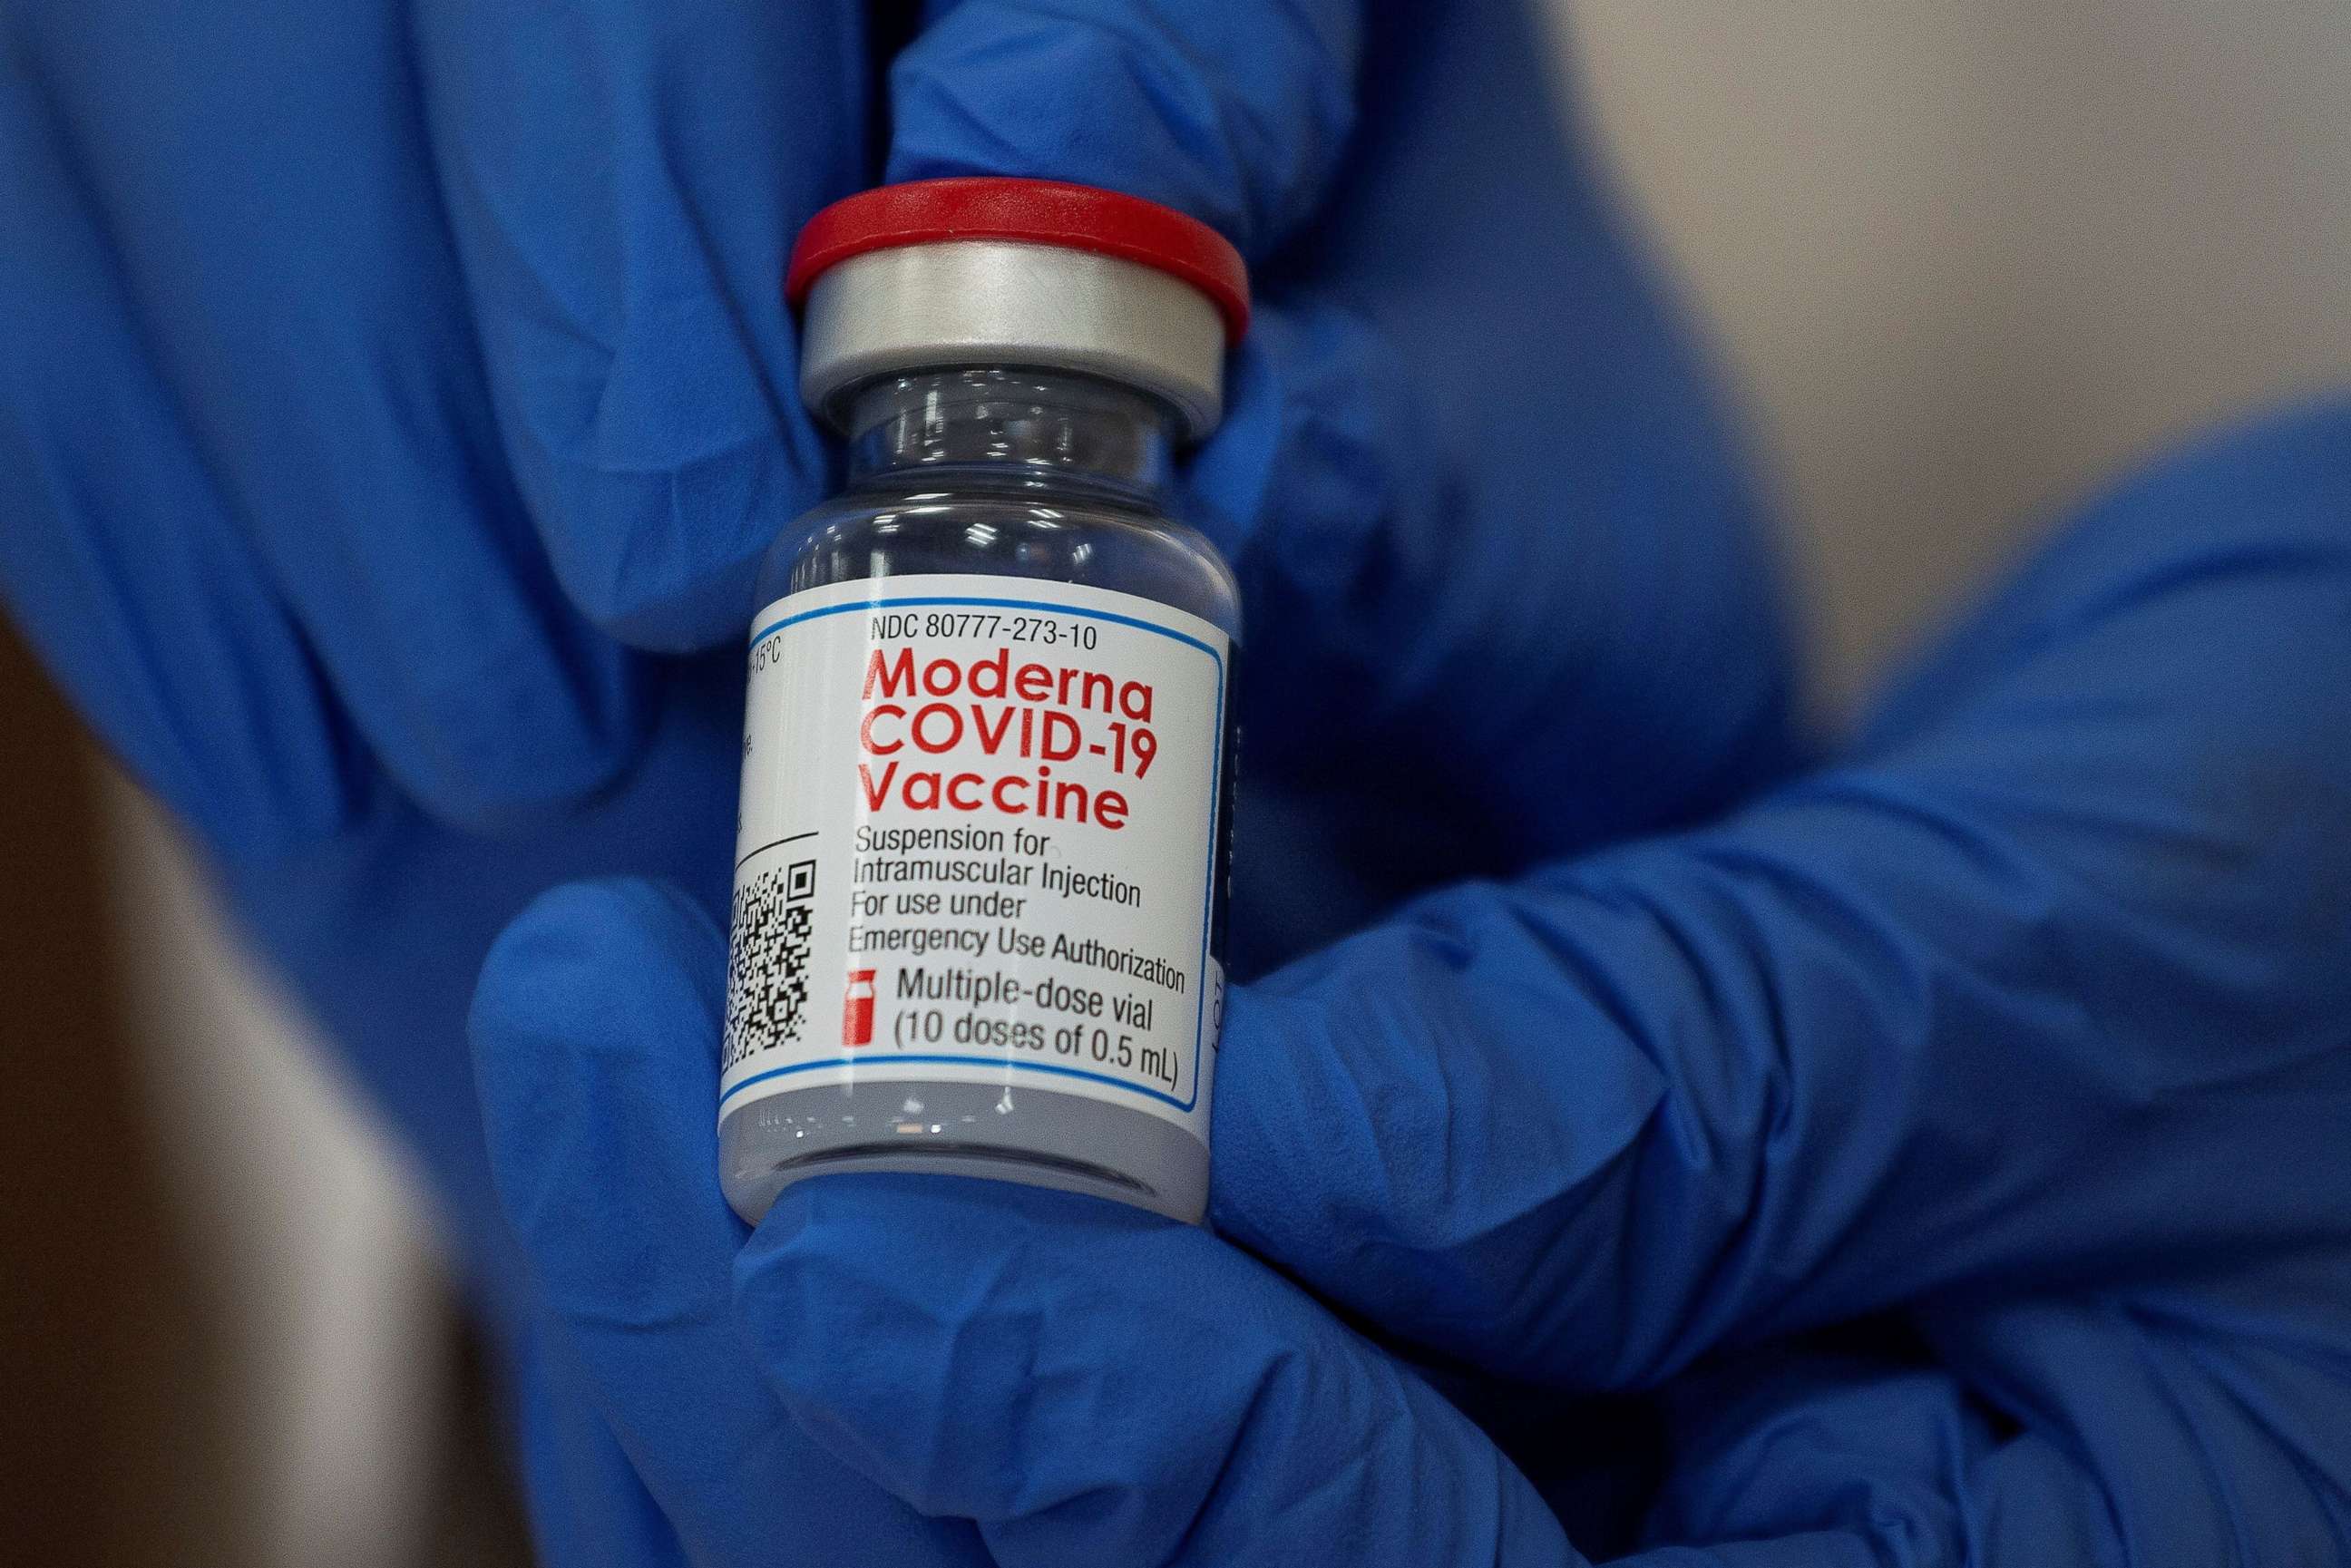 PHOTO: A nurse shows the Moderna COVID-19 vaccine at Northwell Health's Long Island Jewish Valley Stream hospital in New York, Dec. 21, 2020.